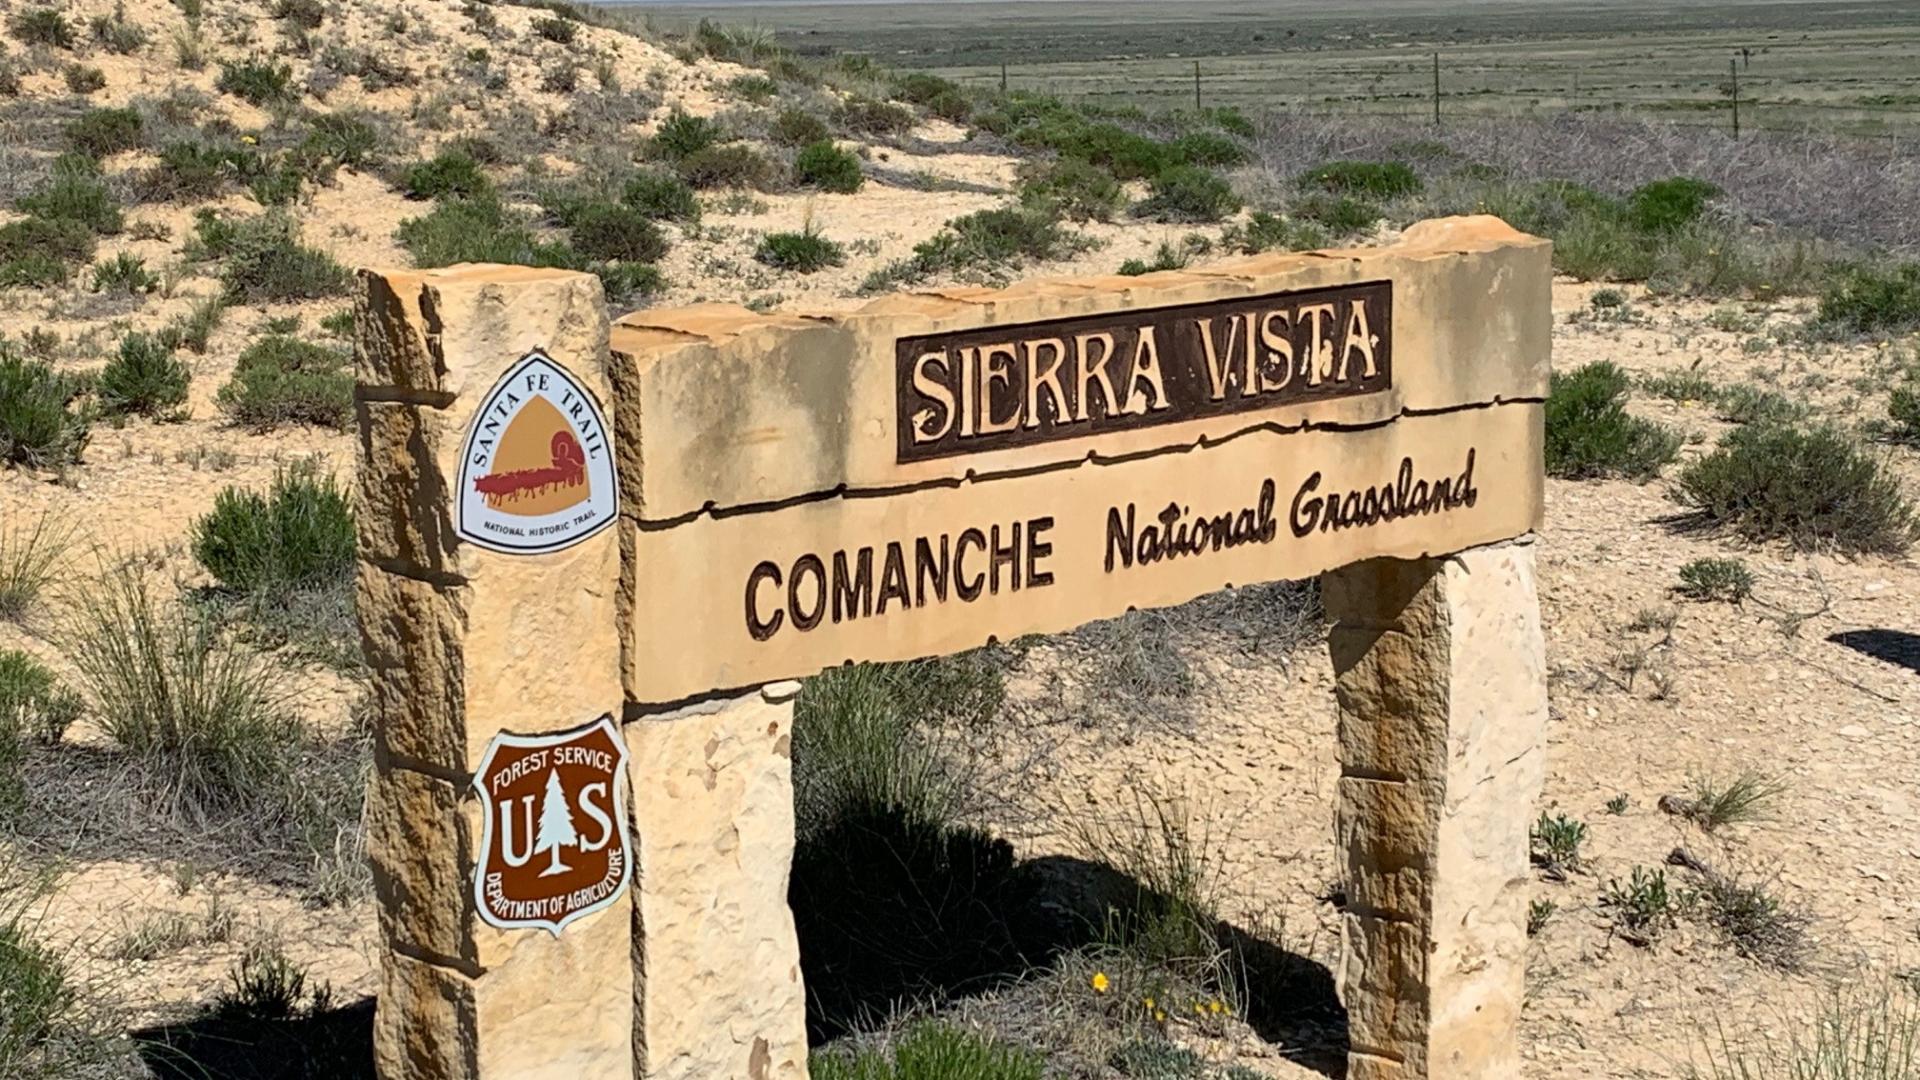 Comanche National Grassland sign